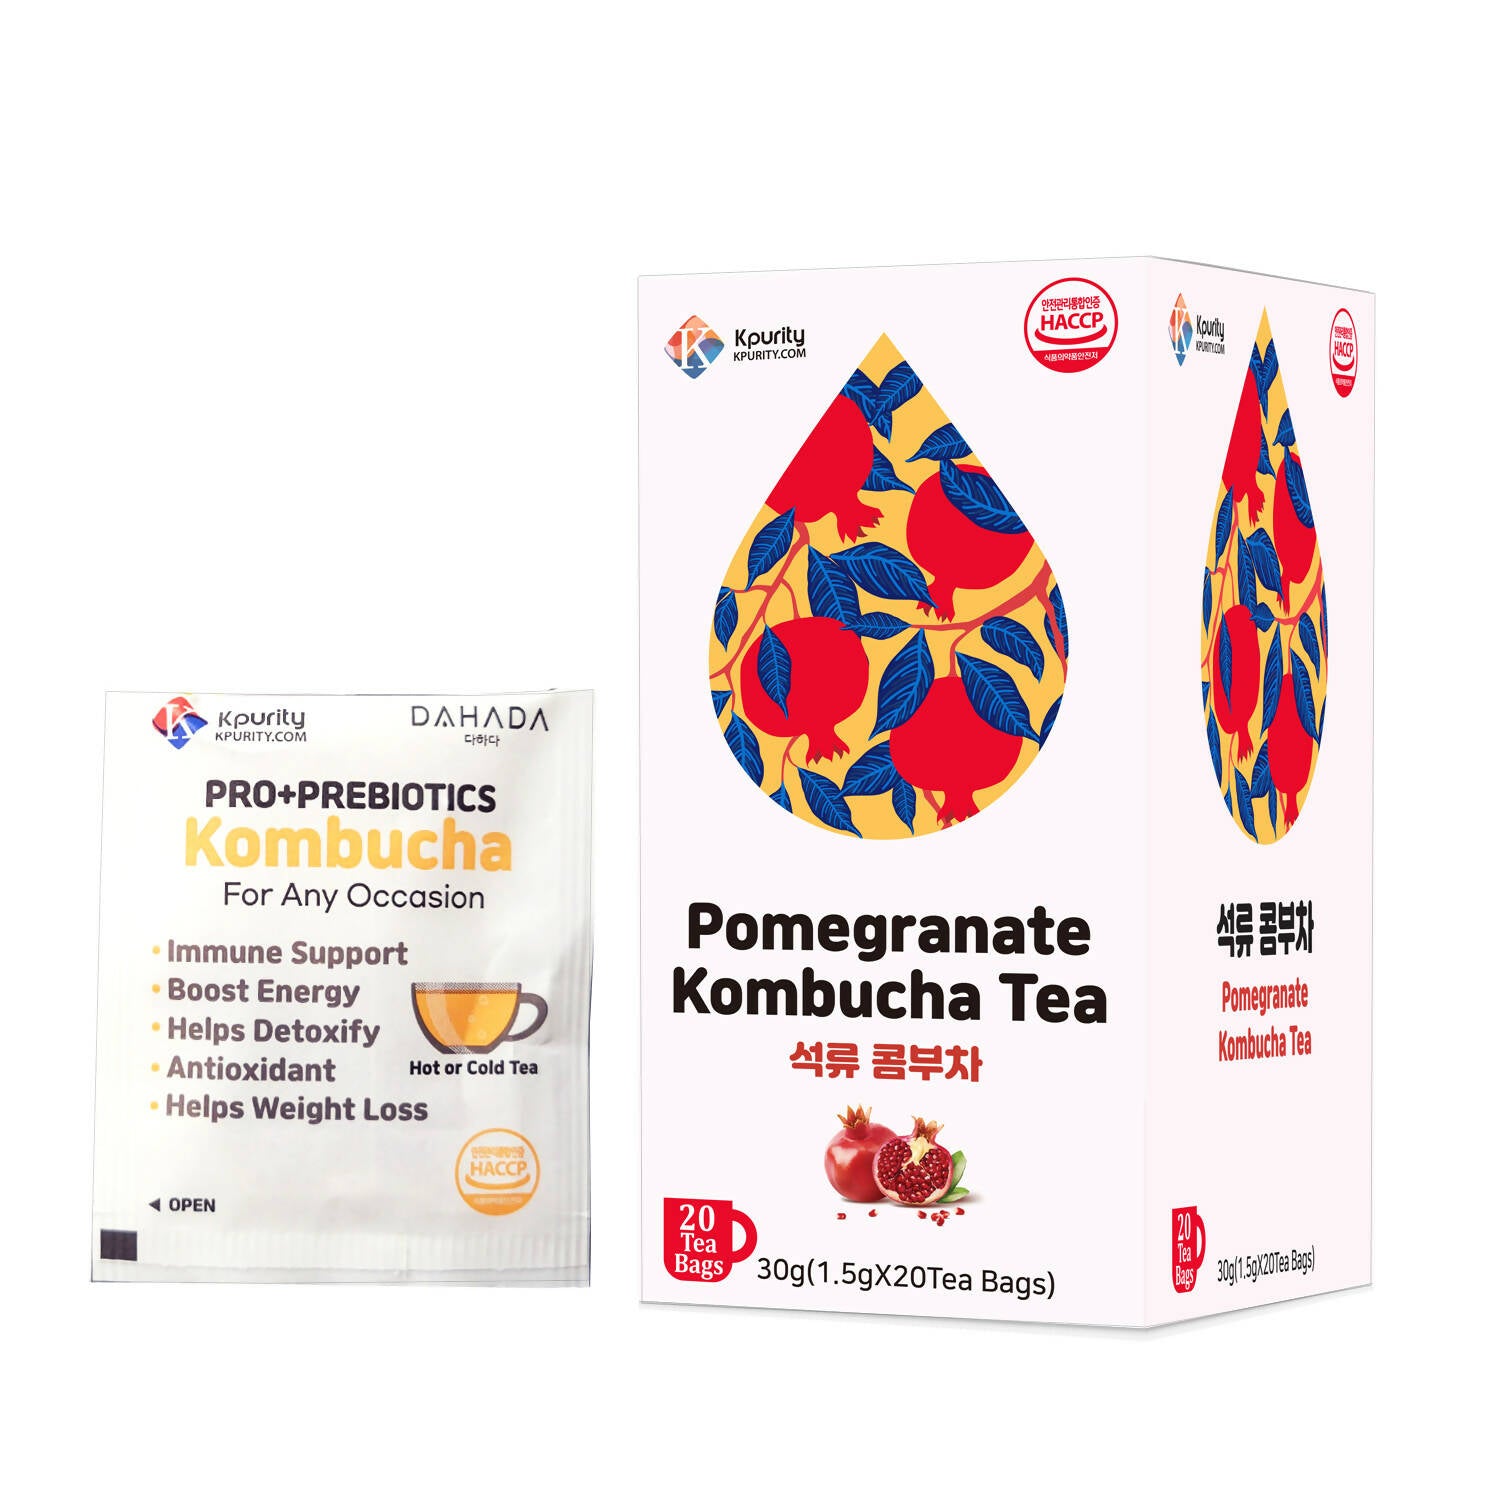 Sweet Yuja Kombucha Tea (20 Tea Bags) + Pomegranate Kombucha Tea (20 Tea Bags)